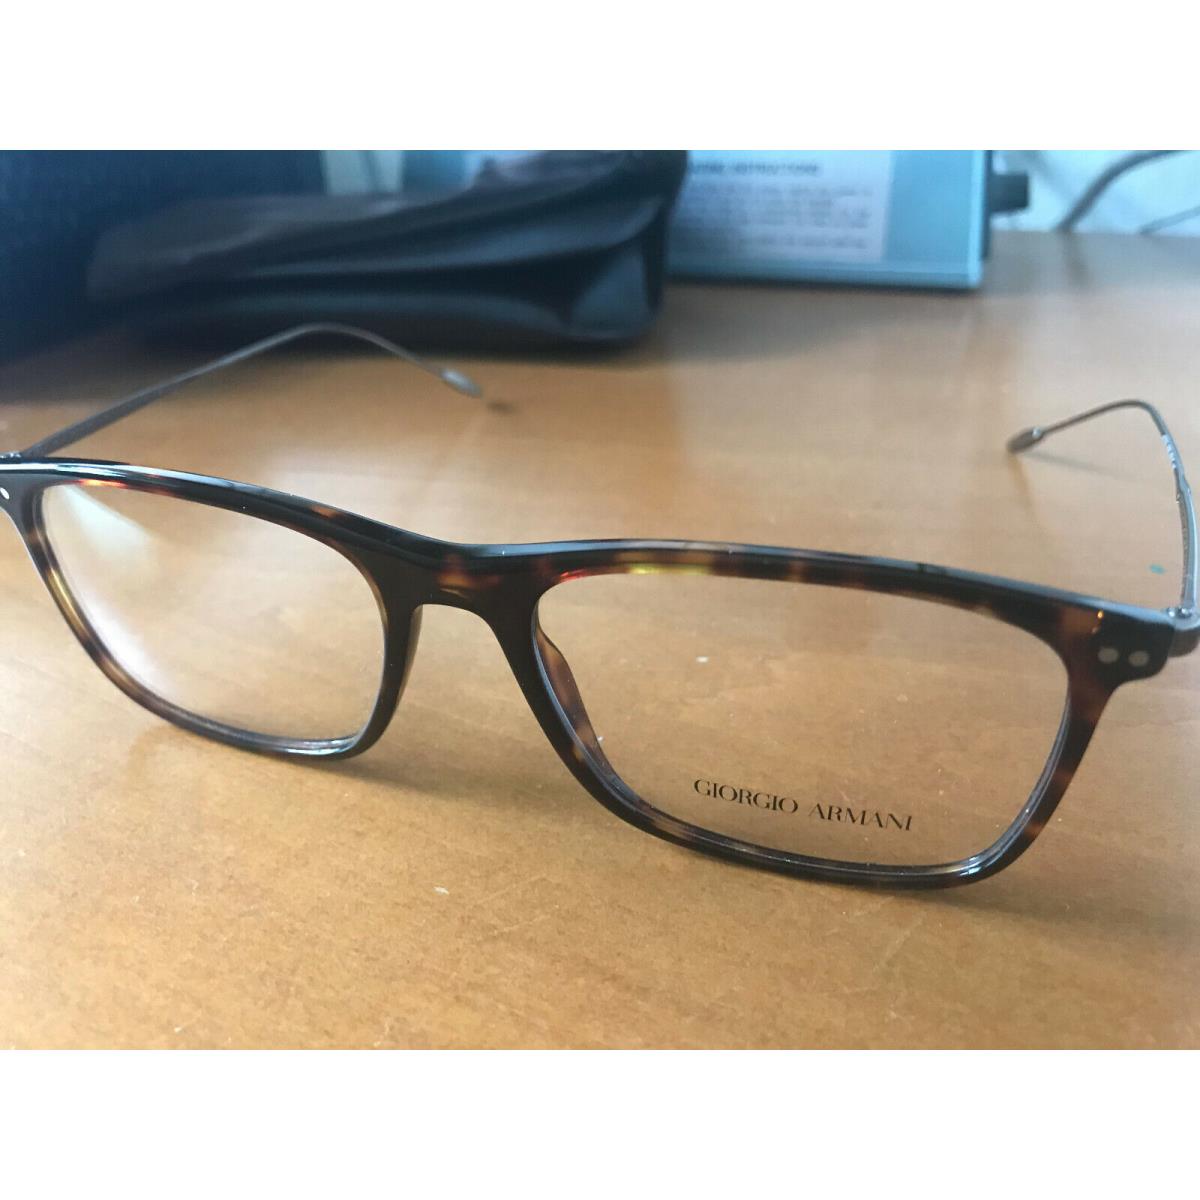 Giorgio Armani eyeglasses 